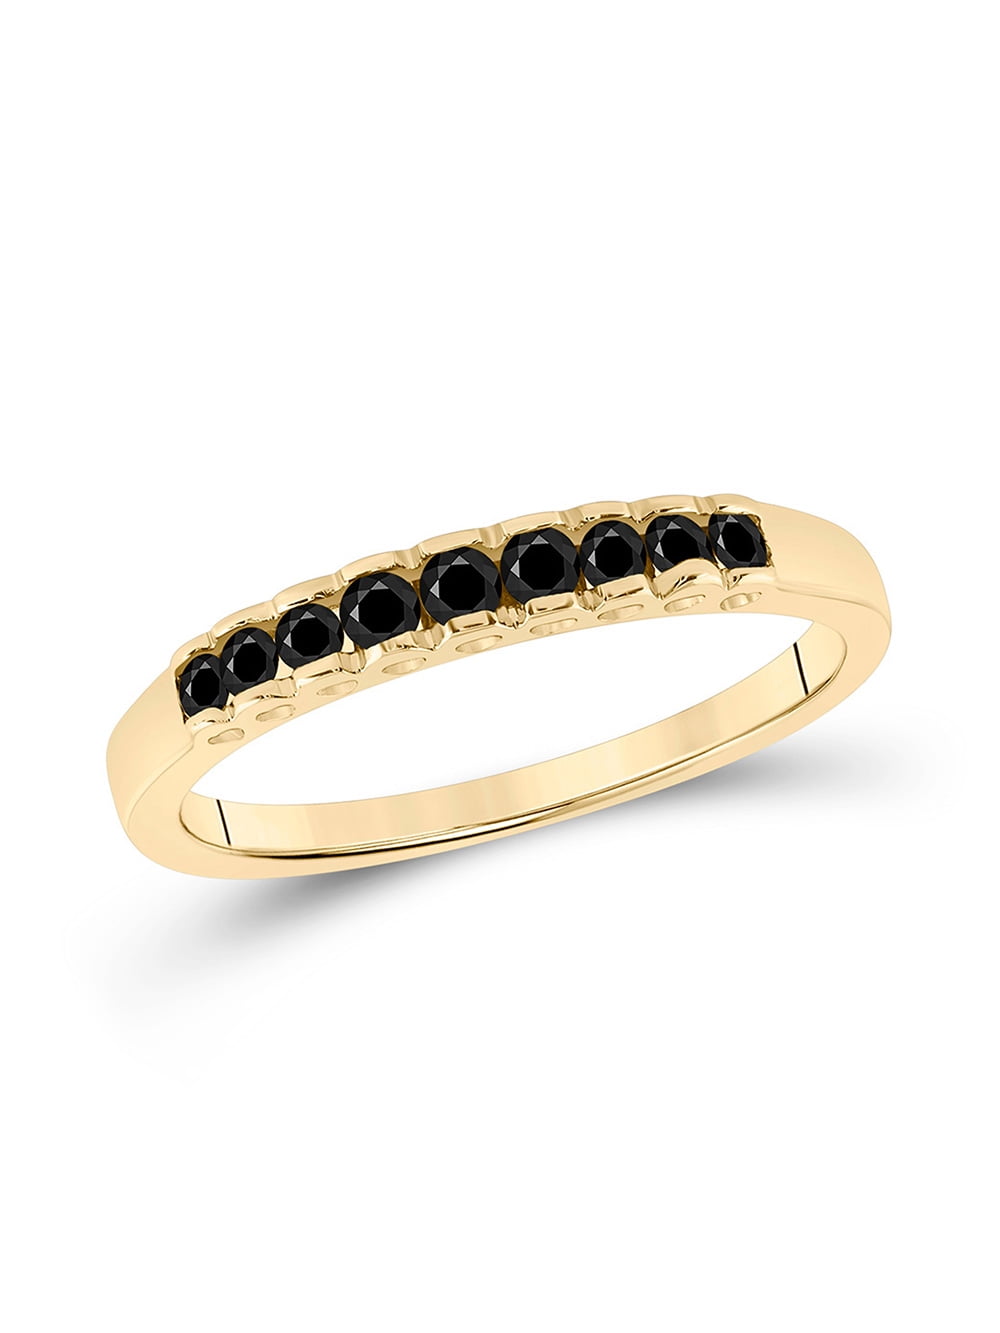 10kt Yellow Gold Womens Princess Black Color Enhanced Diamond Band Ring 1/4 Cttw 